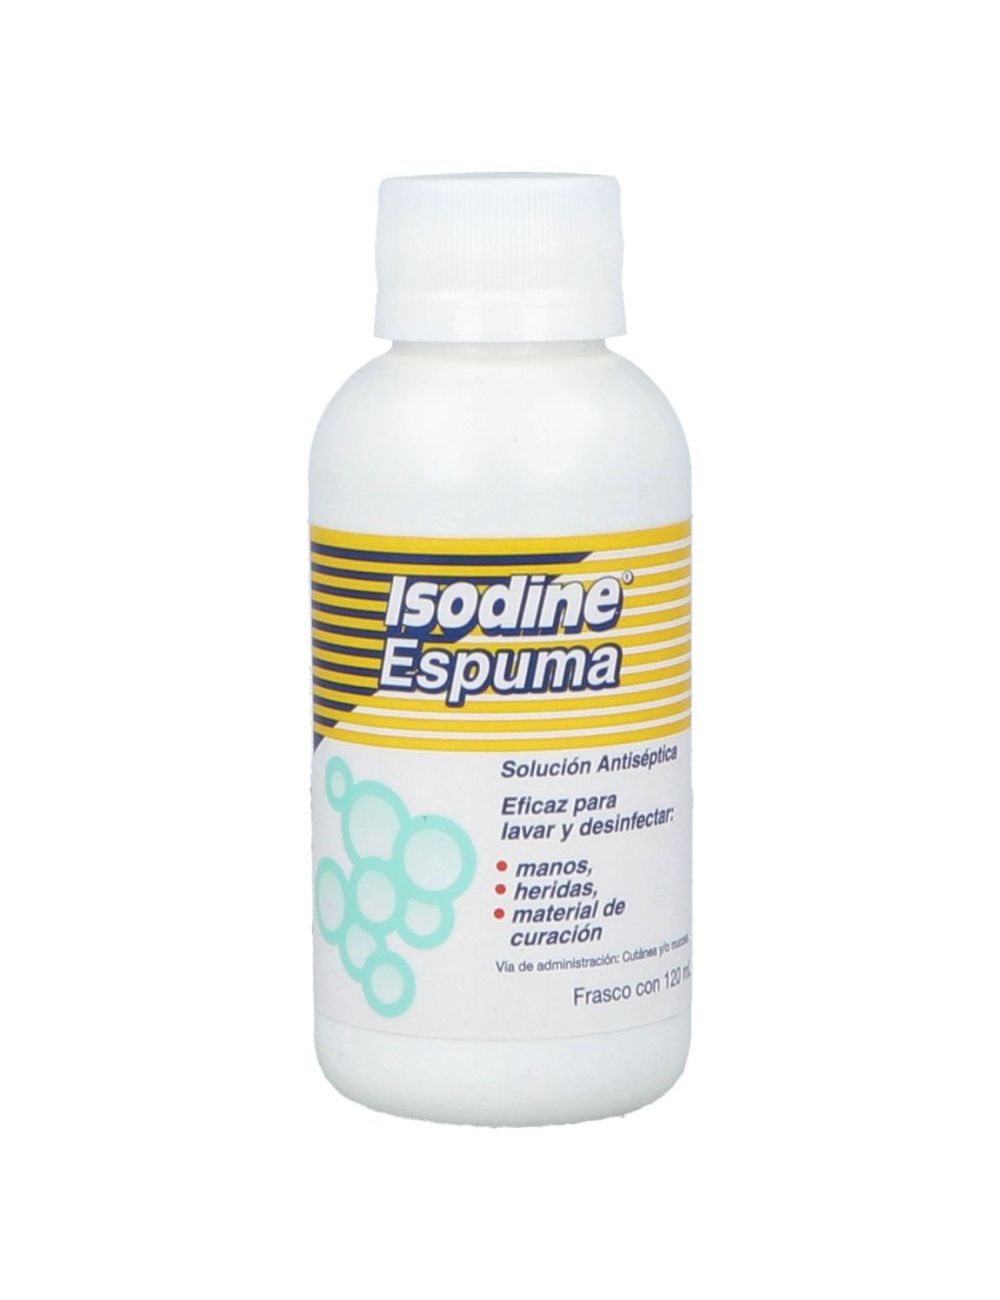 Precio Solución Antiséptica Isodine espuma 120 ml | Farmalisto MX